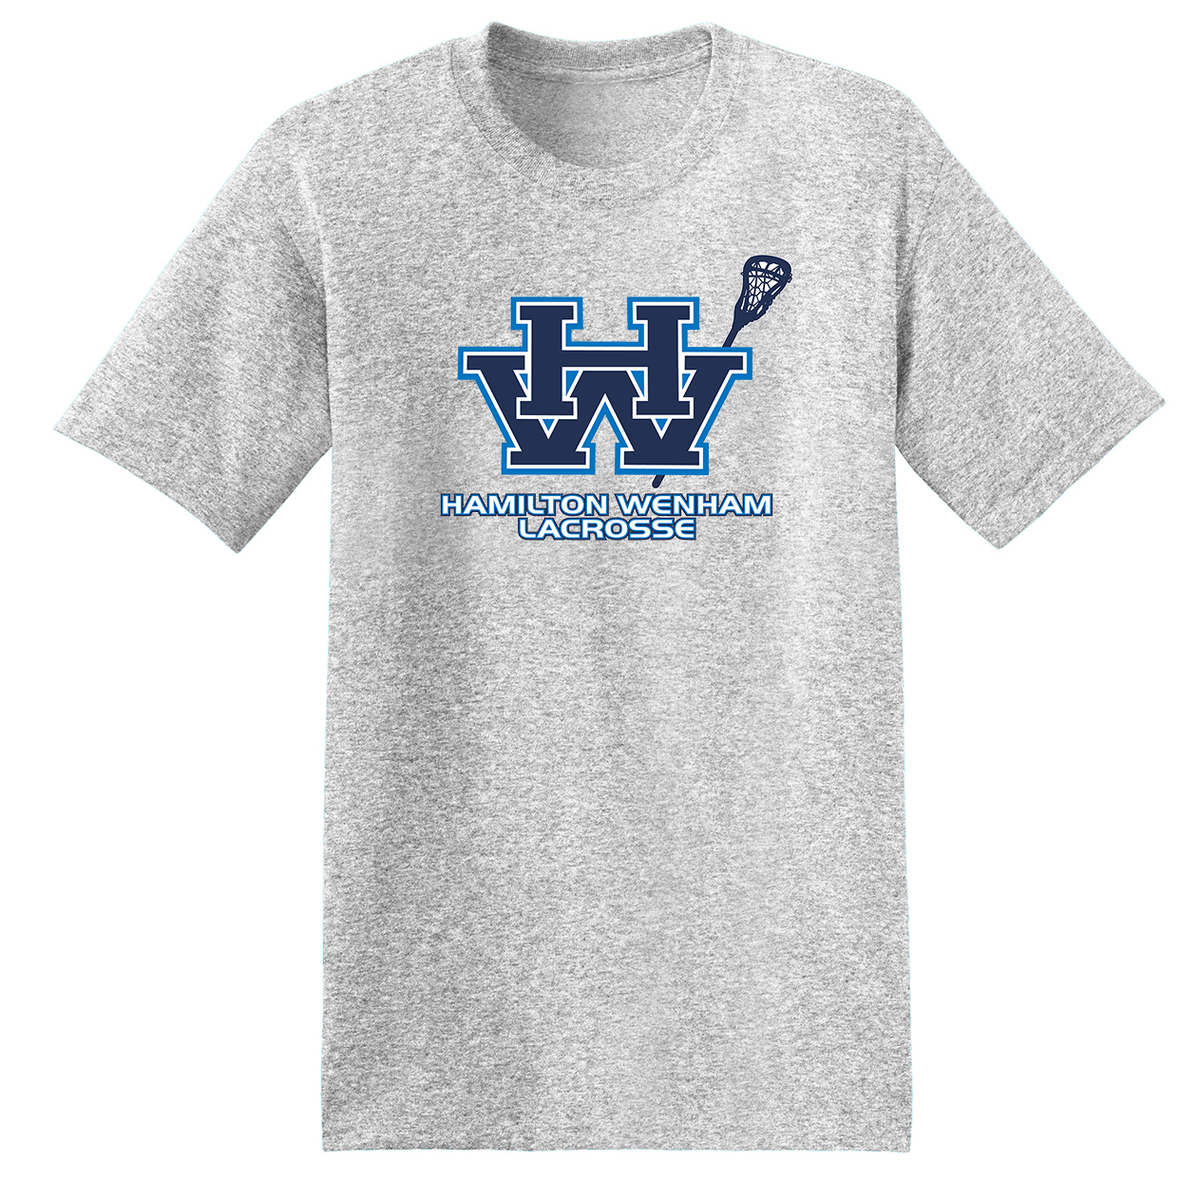 Hamilton Wenham Lacrosse Men's T-Shirt